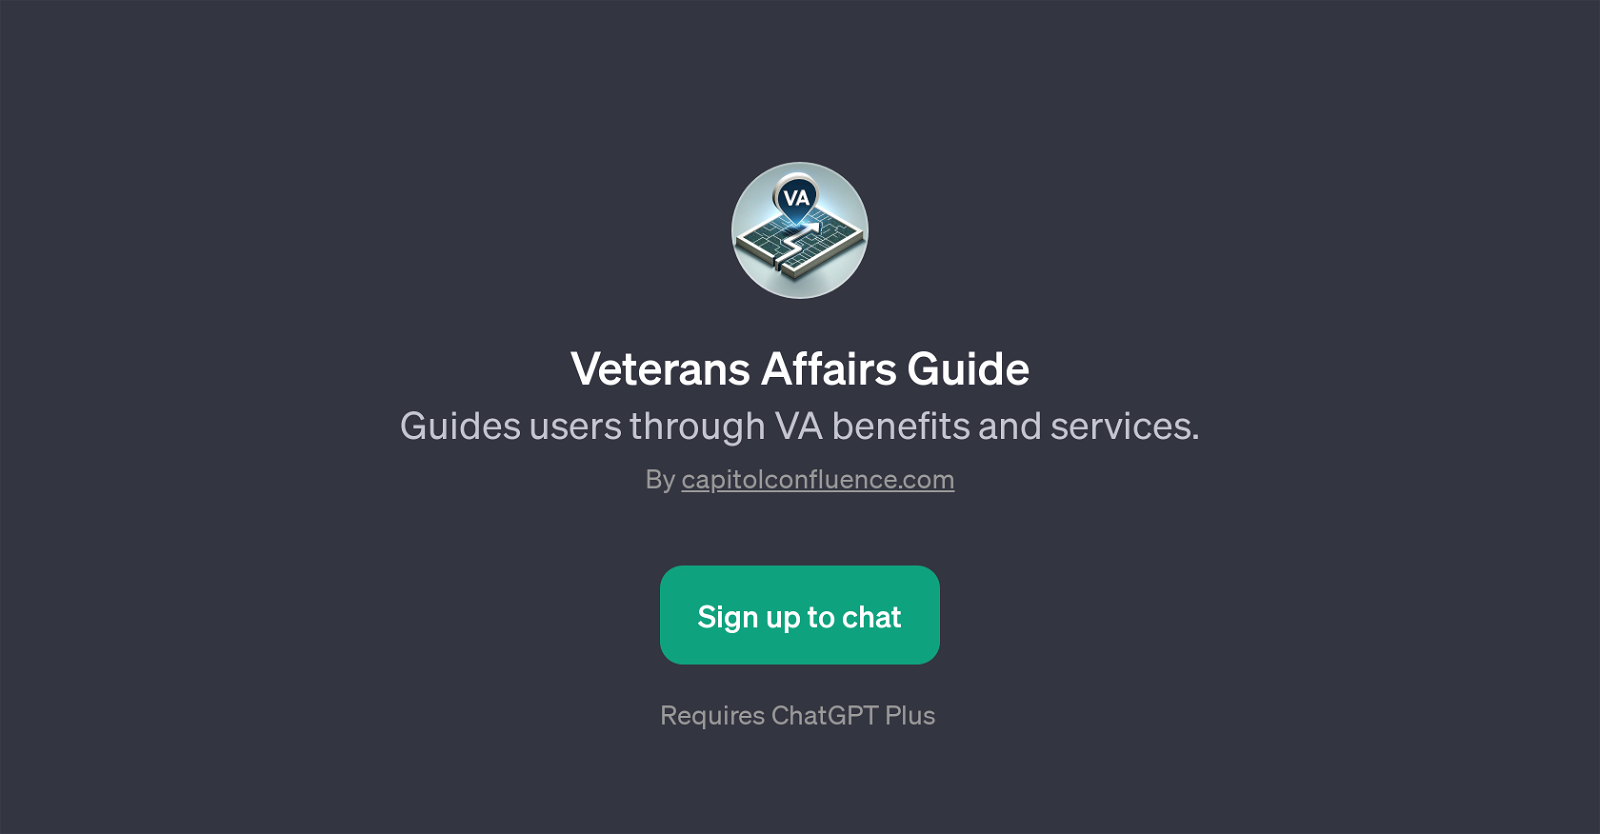 Veterans Affairs Guide website